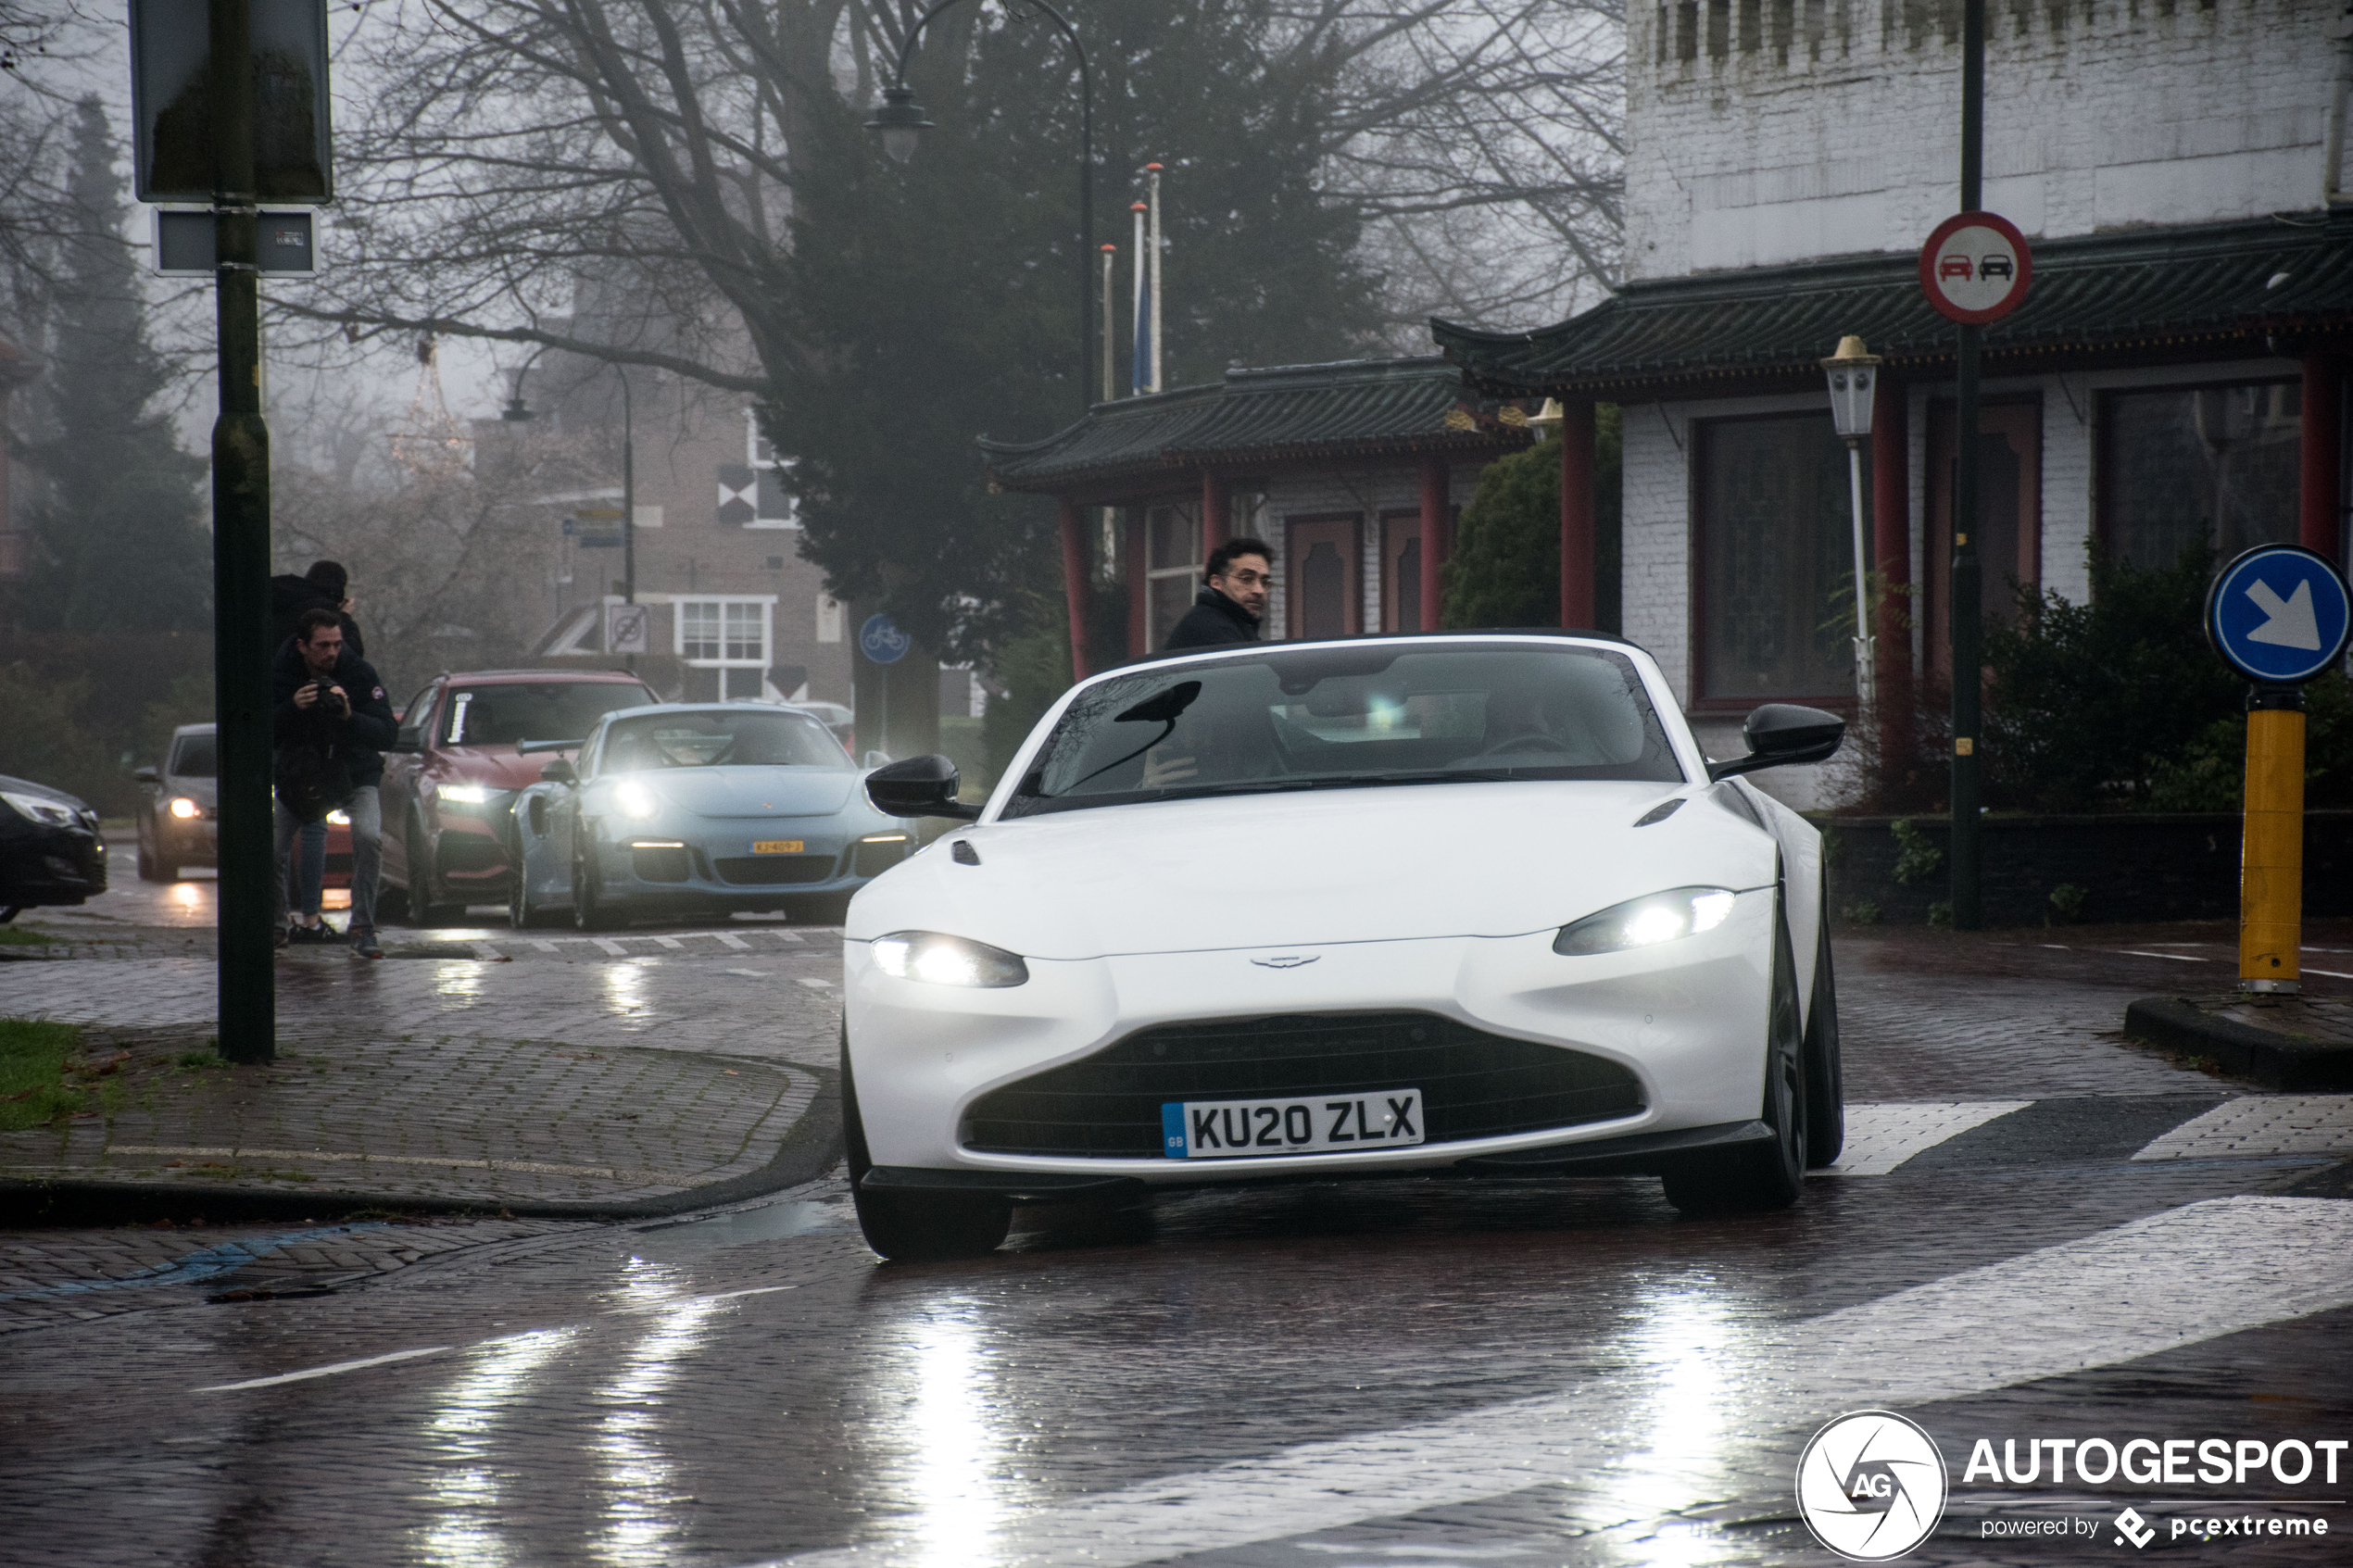 Aston Martin V8 Vantage Roadster 2020